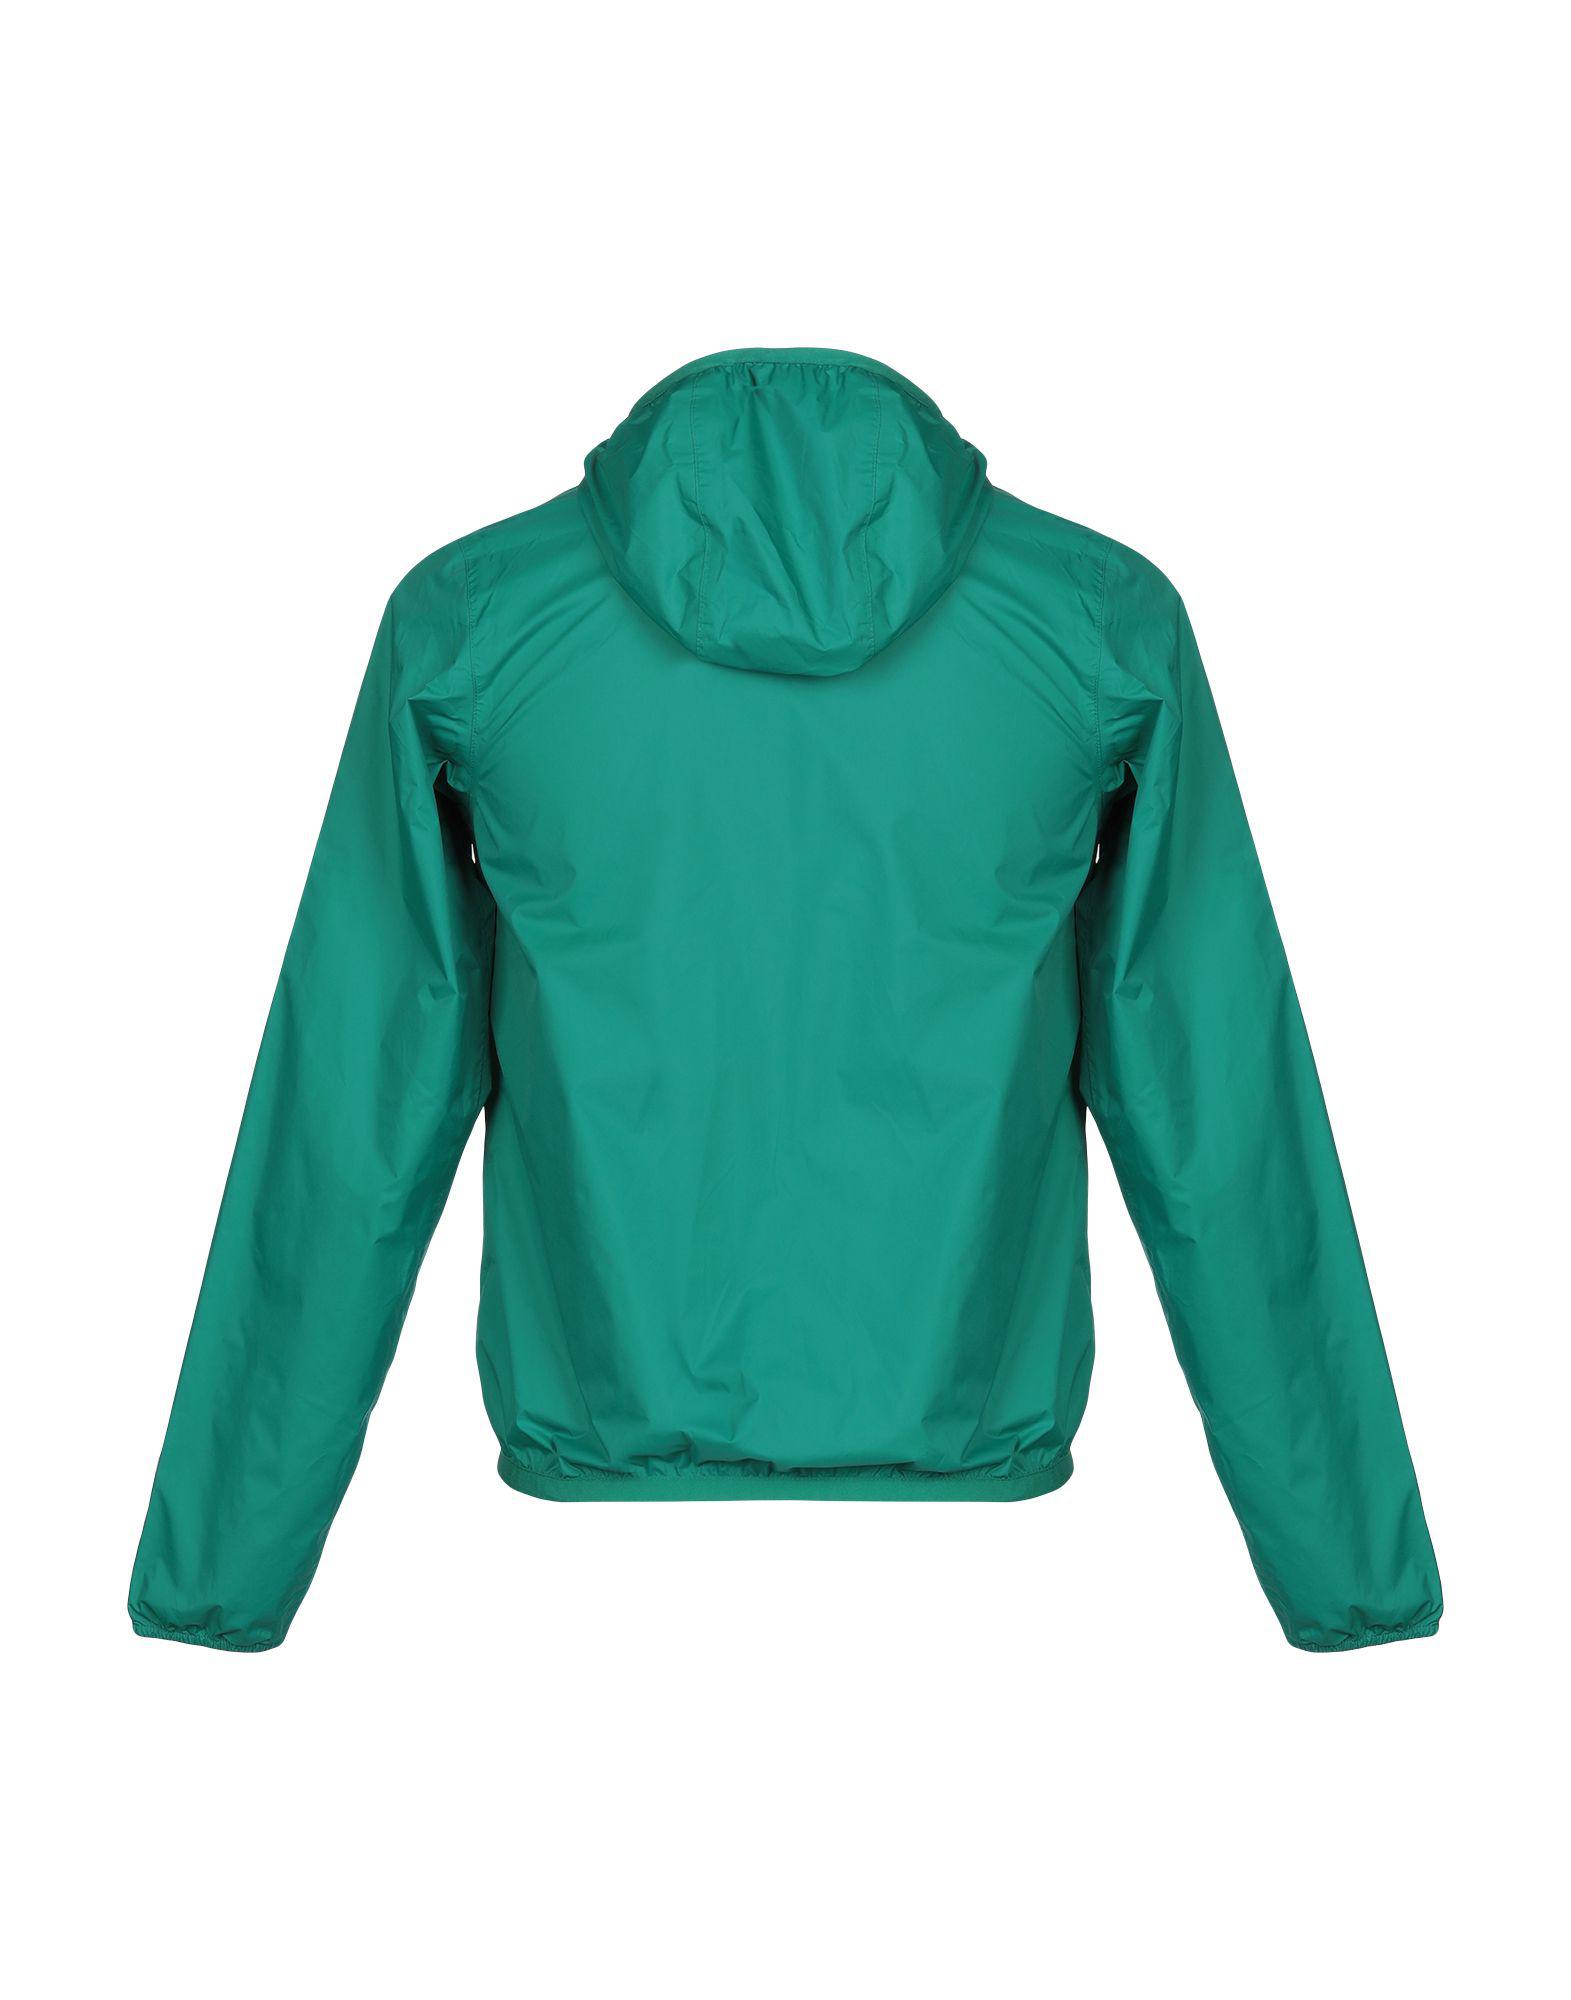 K-Way Jacket in Green for Men - Lyst